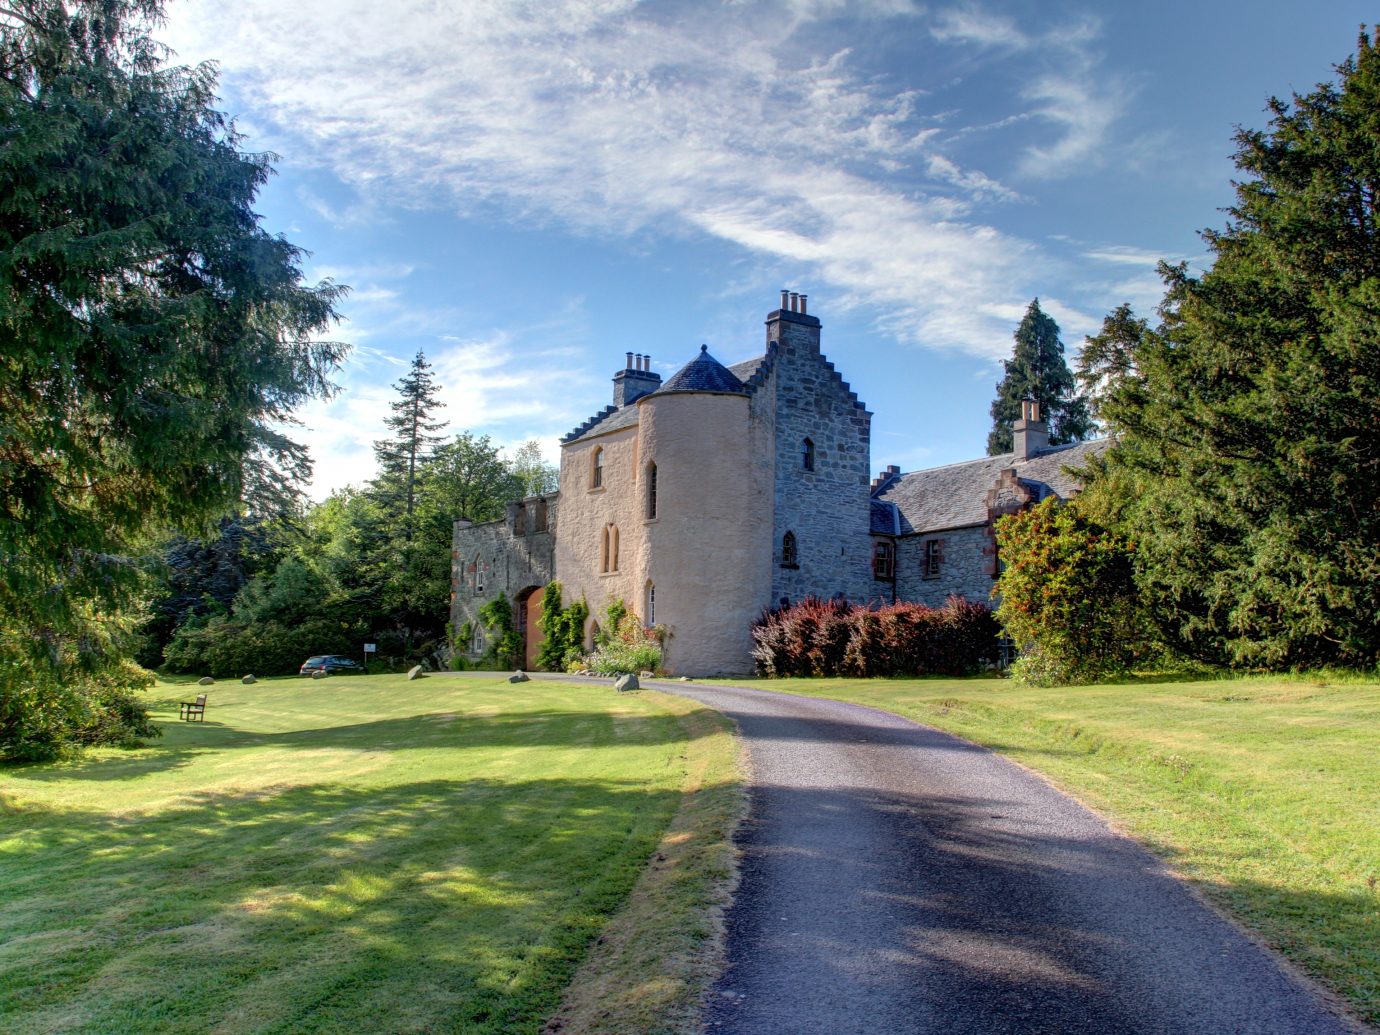 View of Duchray Castle in Scotland